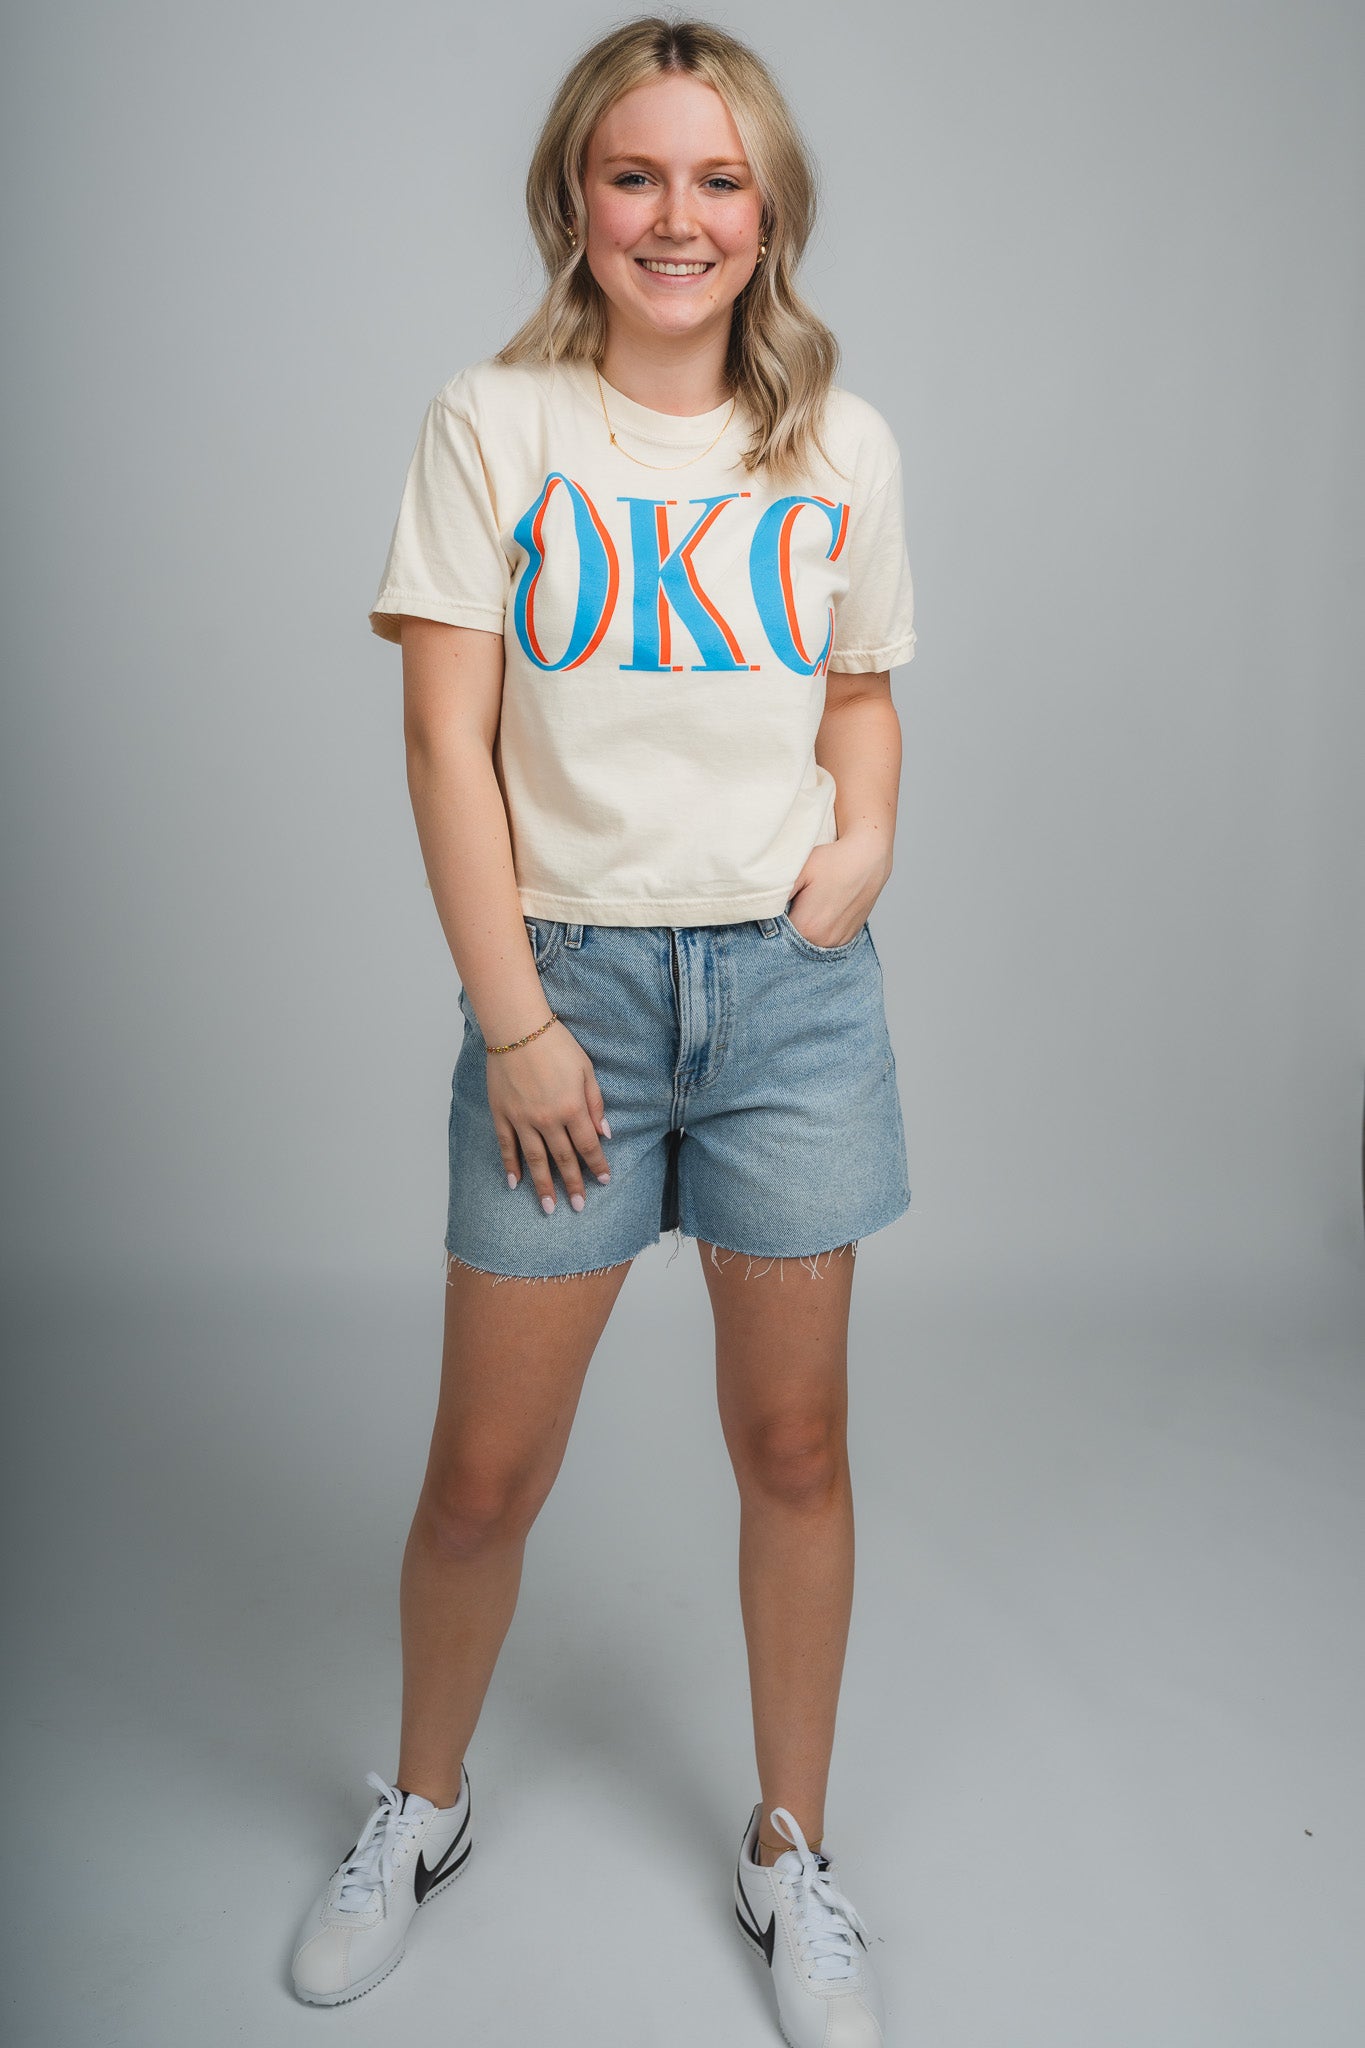 OKC vogue crop t-shirt - Trendy OKC Thunder T-Shirts at Lush Fashion Lounge Boutique in Oklahoma City